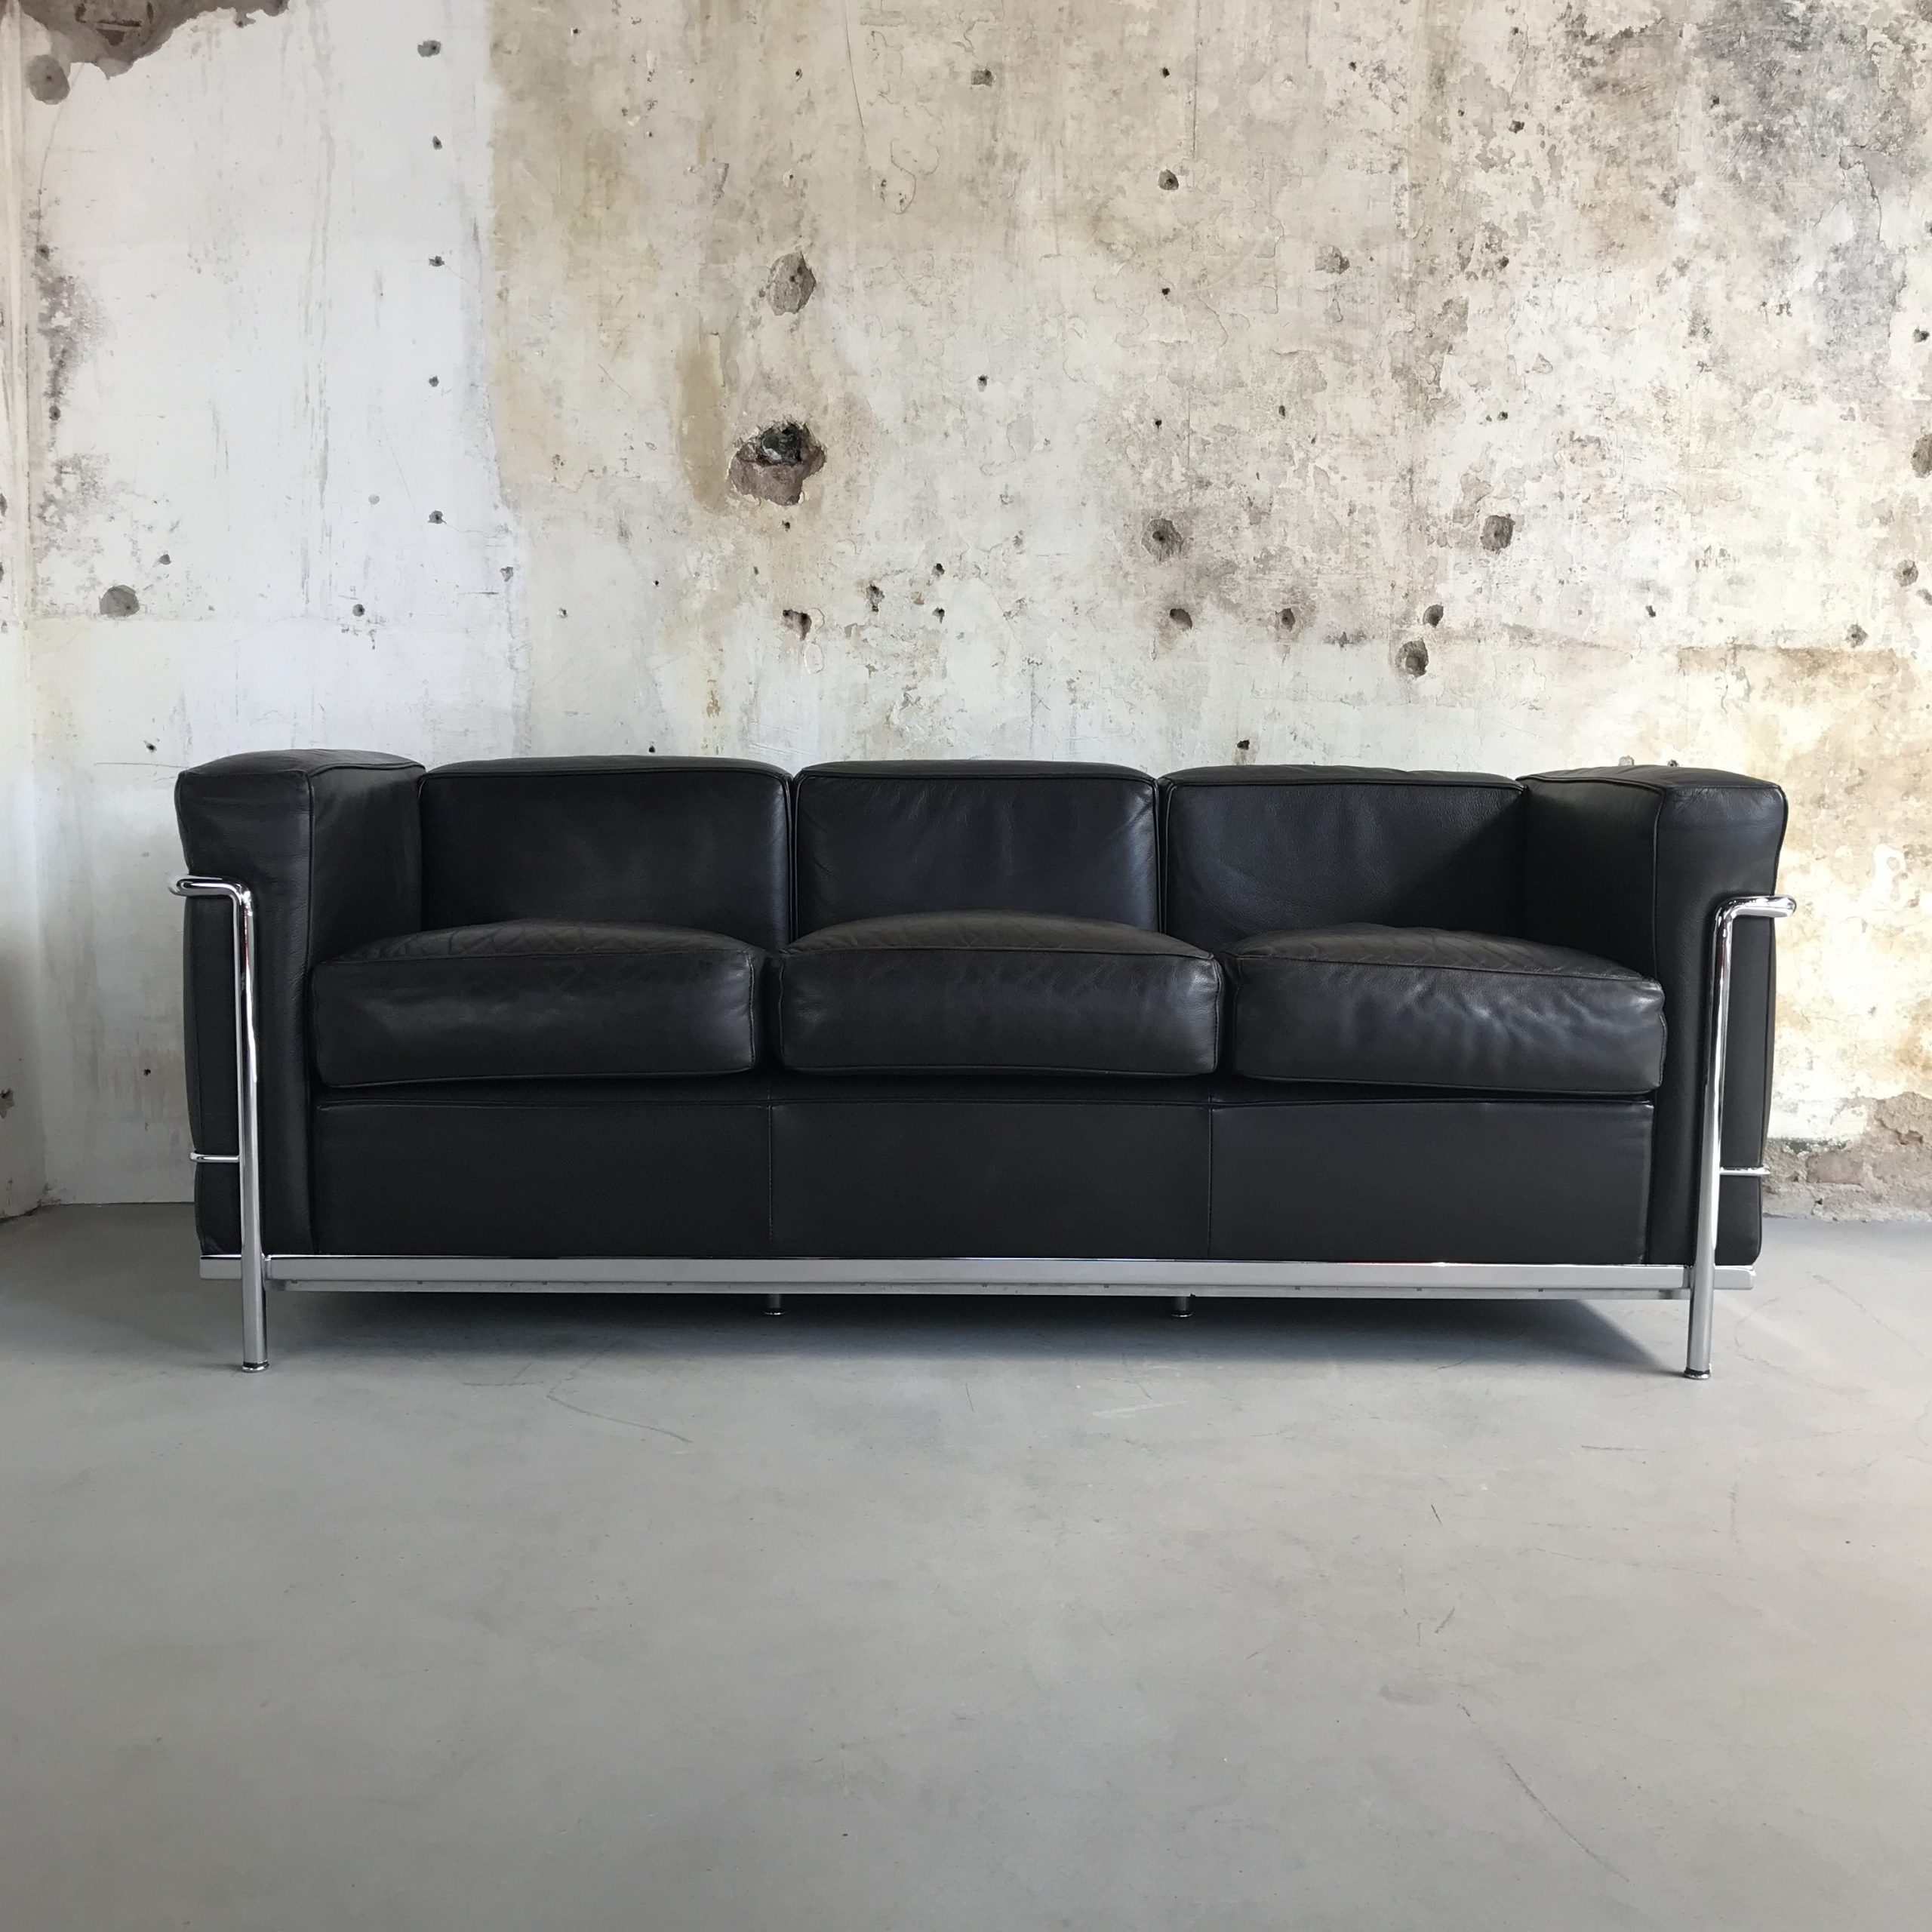 Sofa LC2 Masculino couro preto Ambientado parede concreto